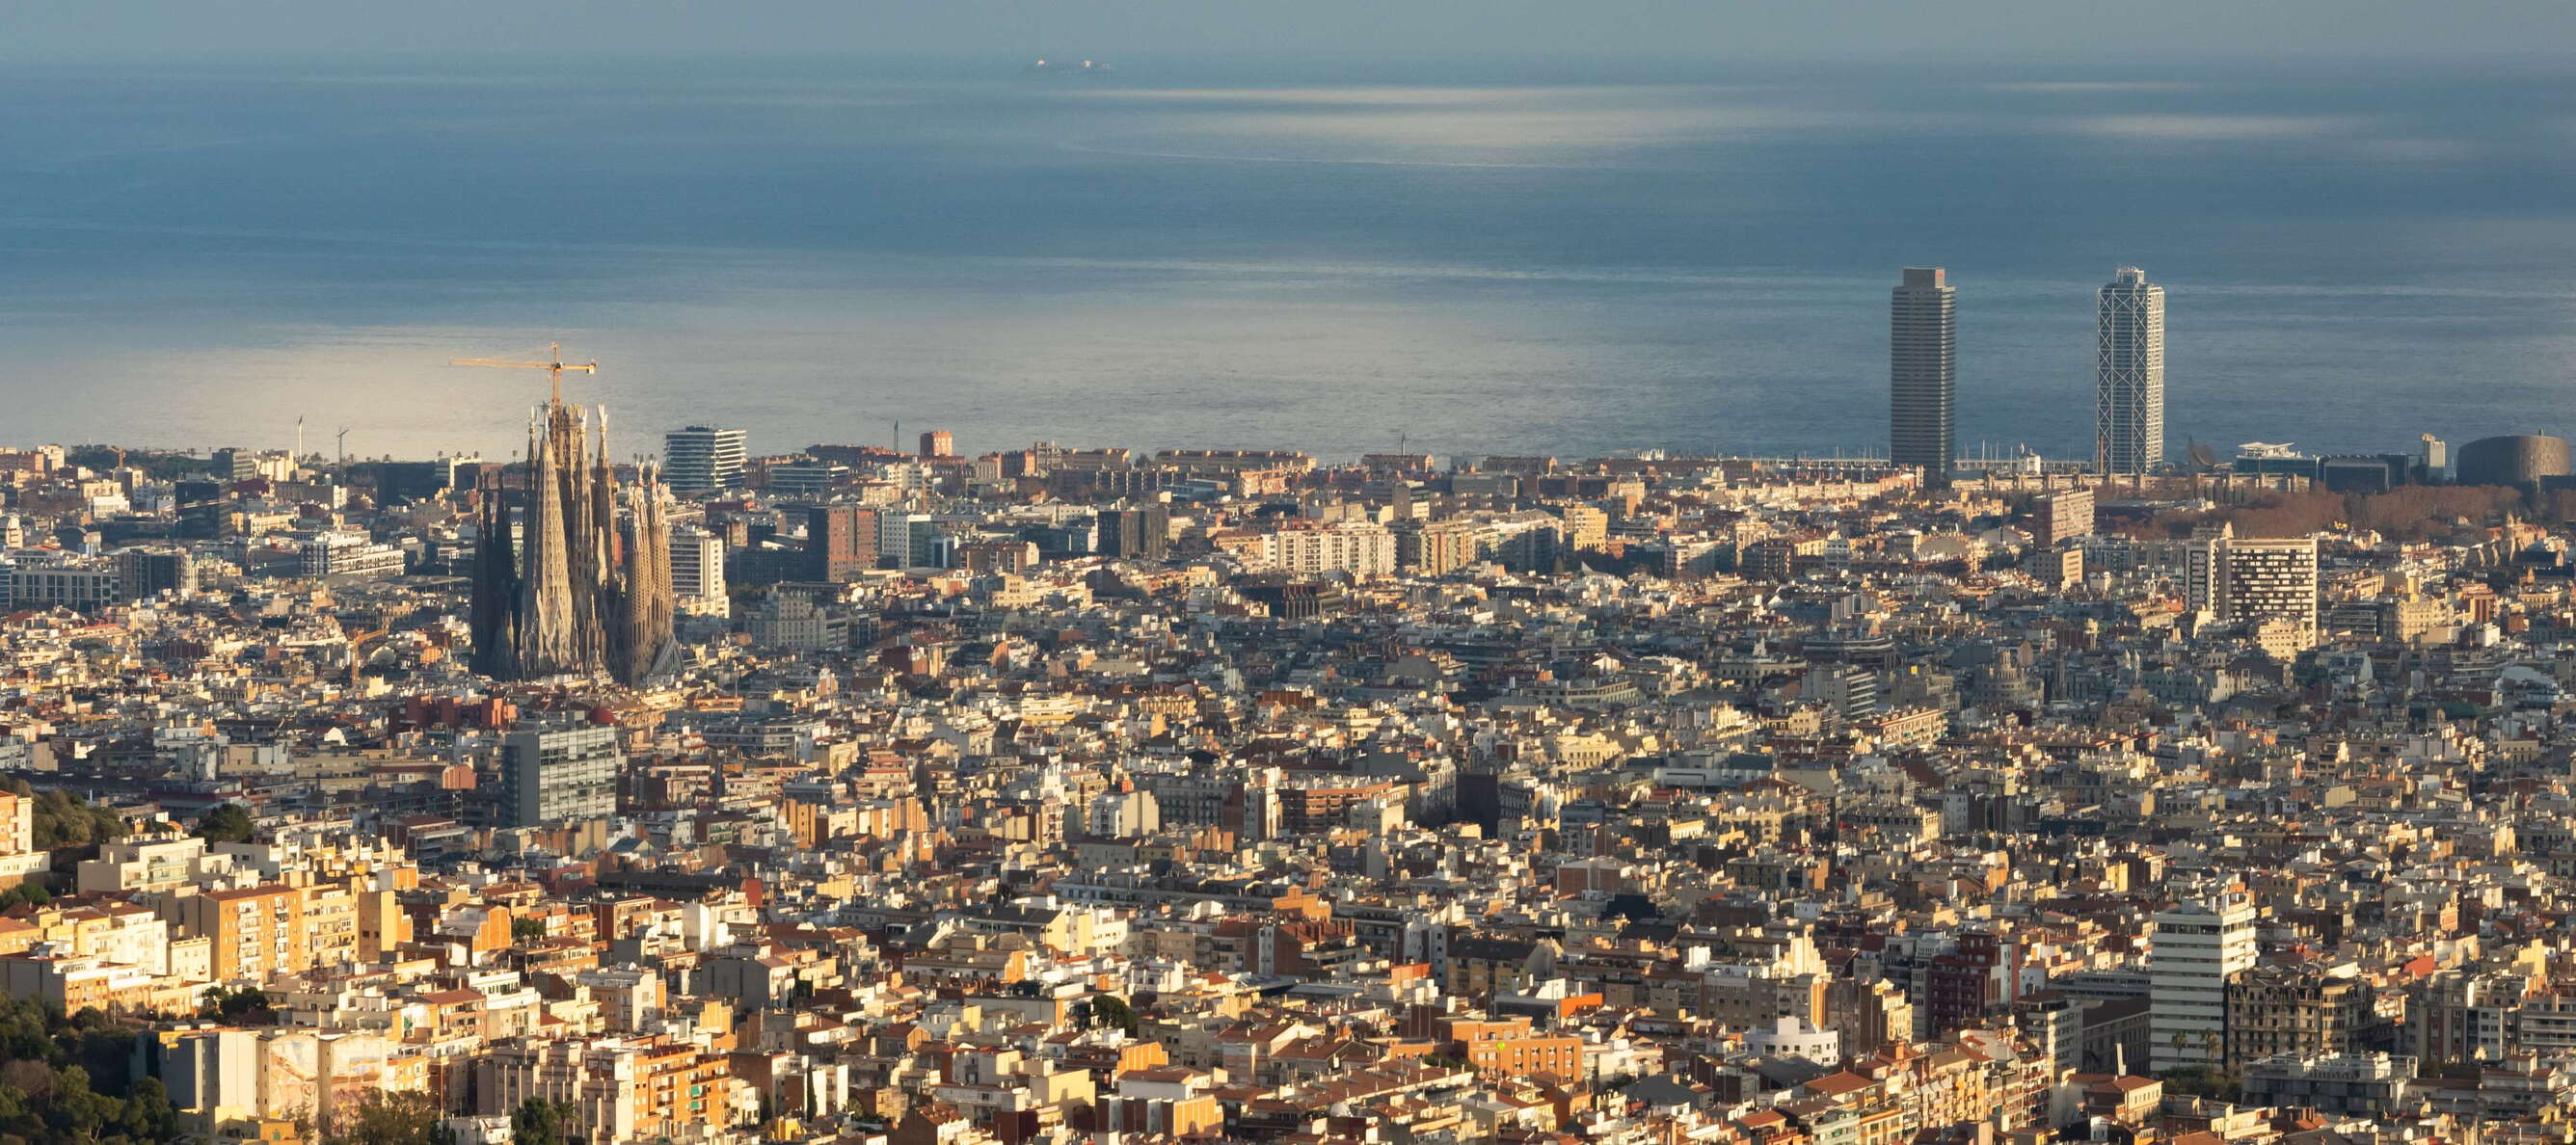 Barcelona with Sagrada Família and Port Olímpic